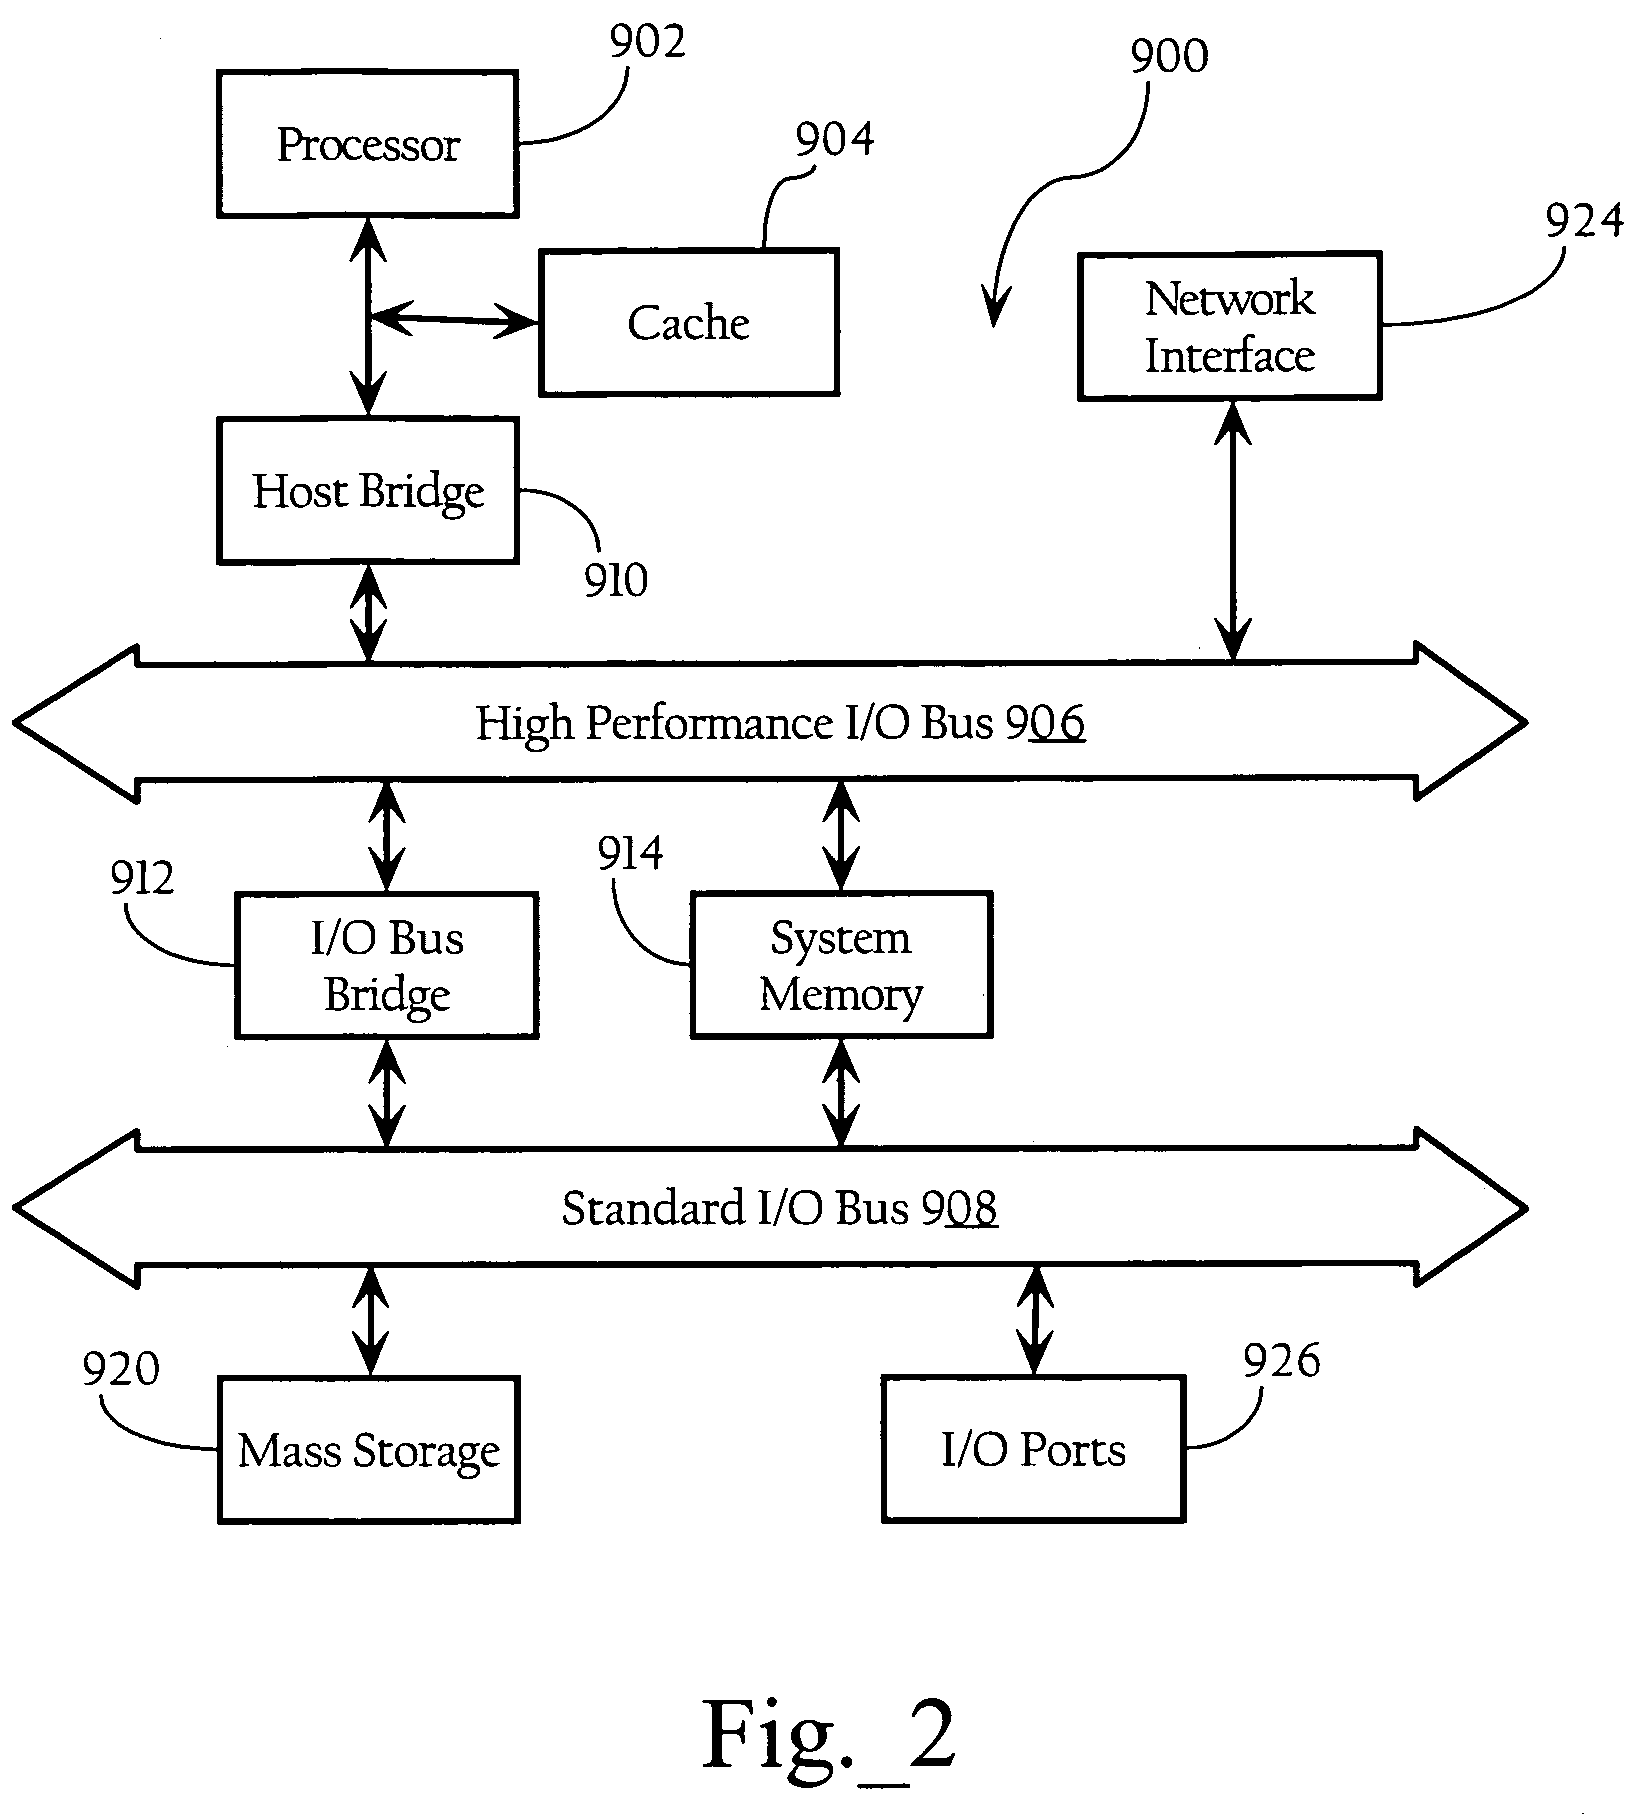 Automated configuration of RF WLANs via selected sensors